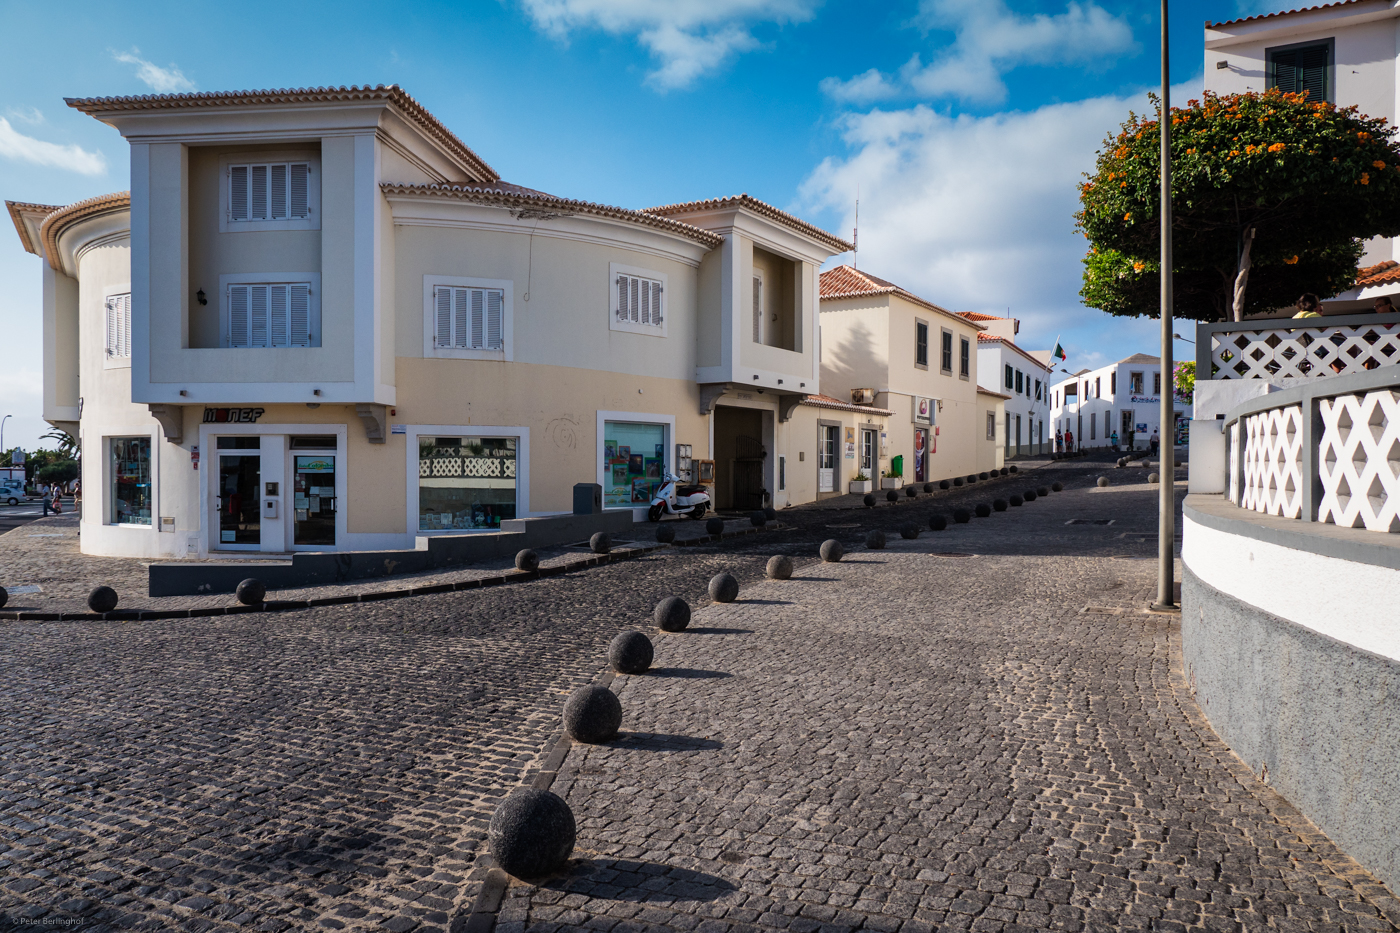 Porto Santo – Vila Baleira 2 | © Peter Berlinghof